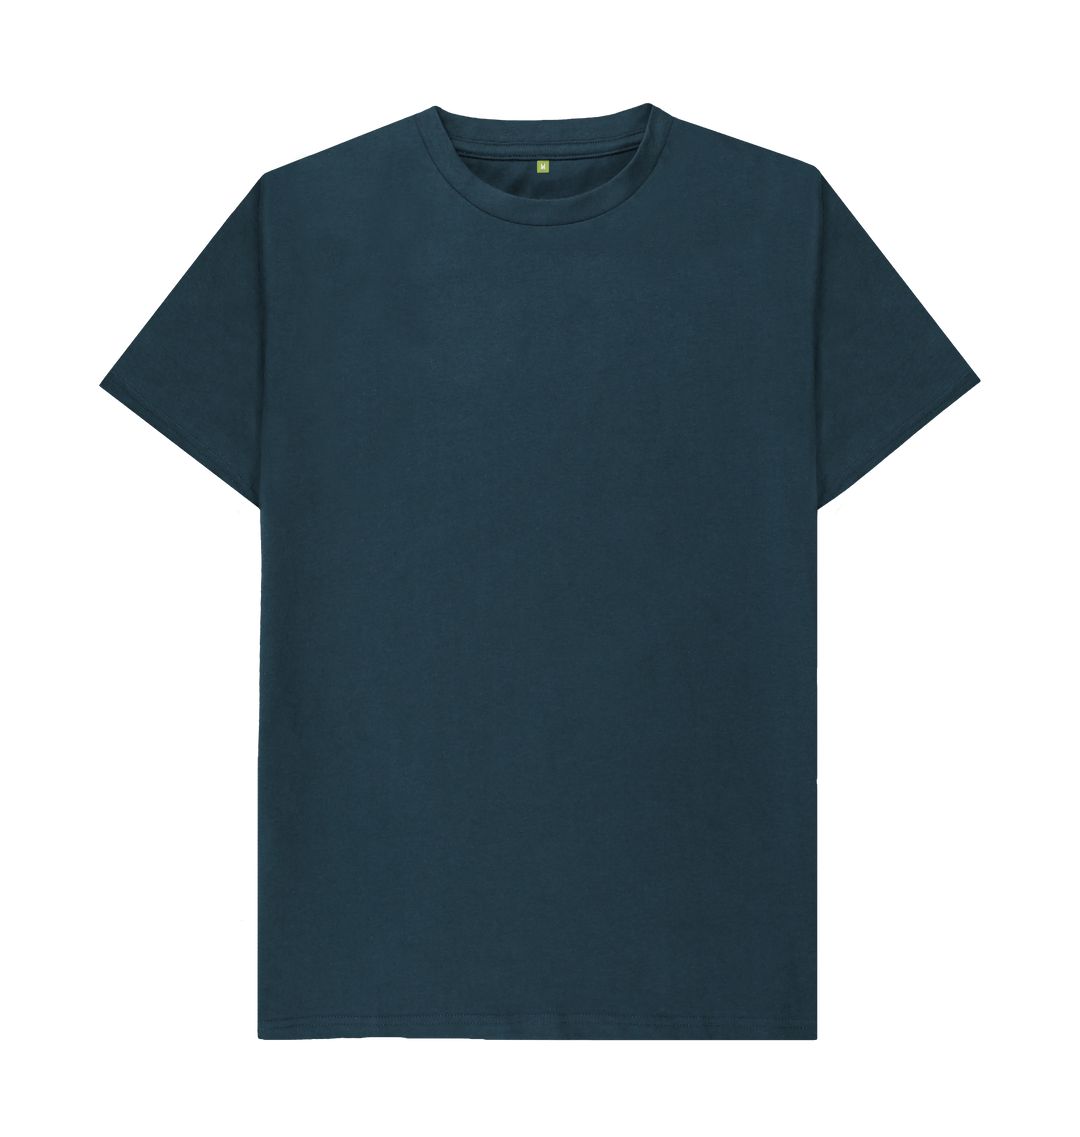 Denim Blue Men's Firestone Bay T-shirt with the Logo on the Back